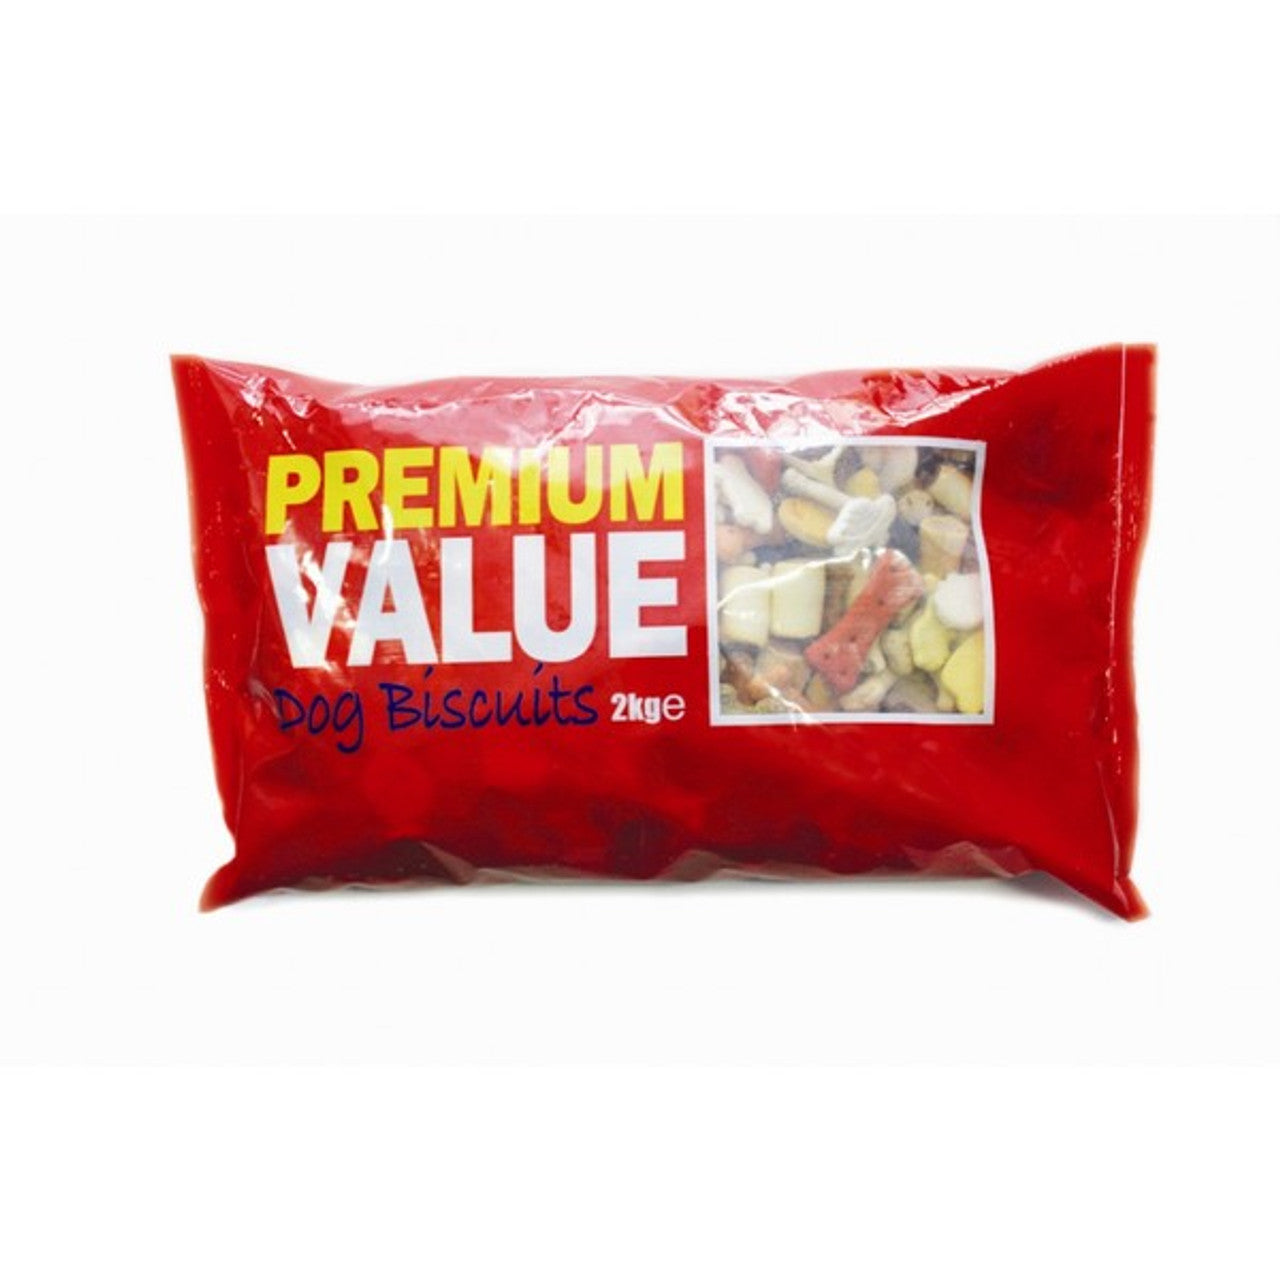 Kennelpak Breederpack Premium Value Dog Biscuits 2kg